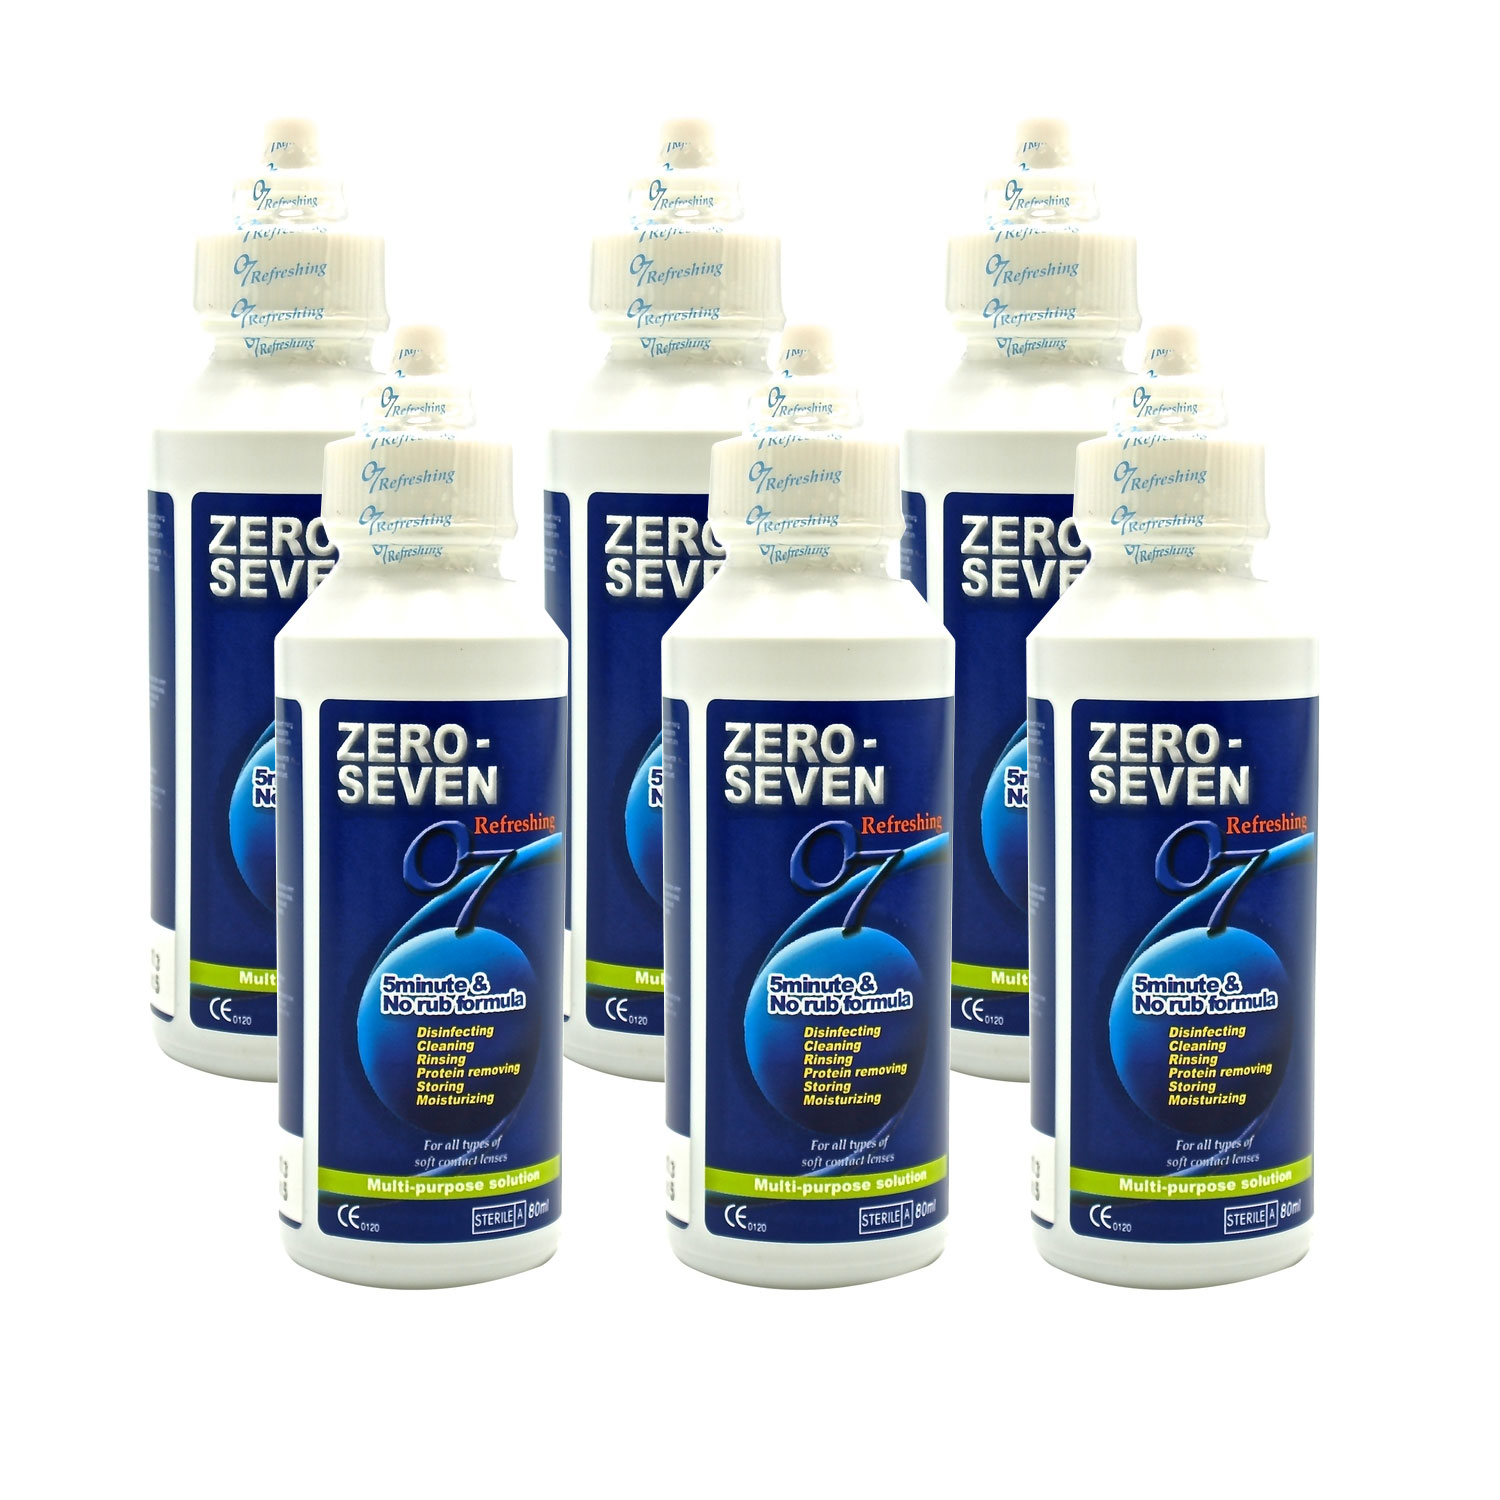 Zestaw: Zero-Seven Refreshing 6×80 ml